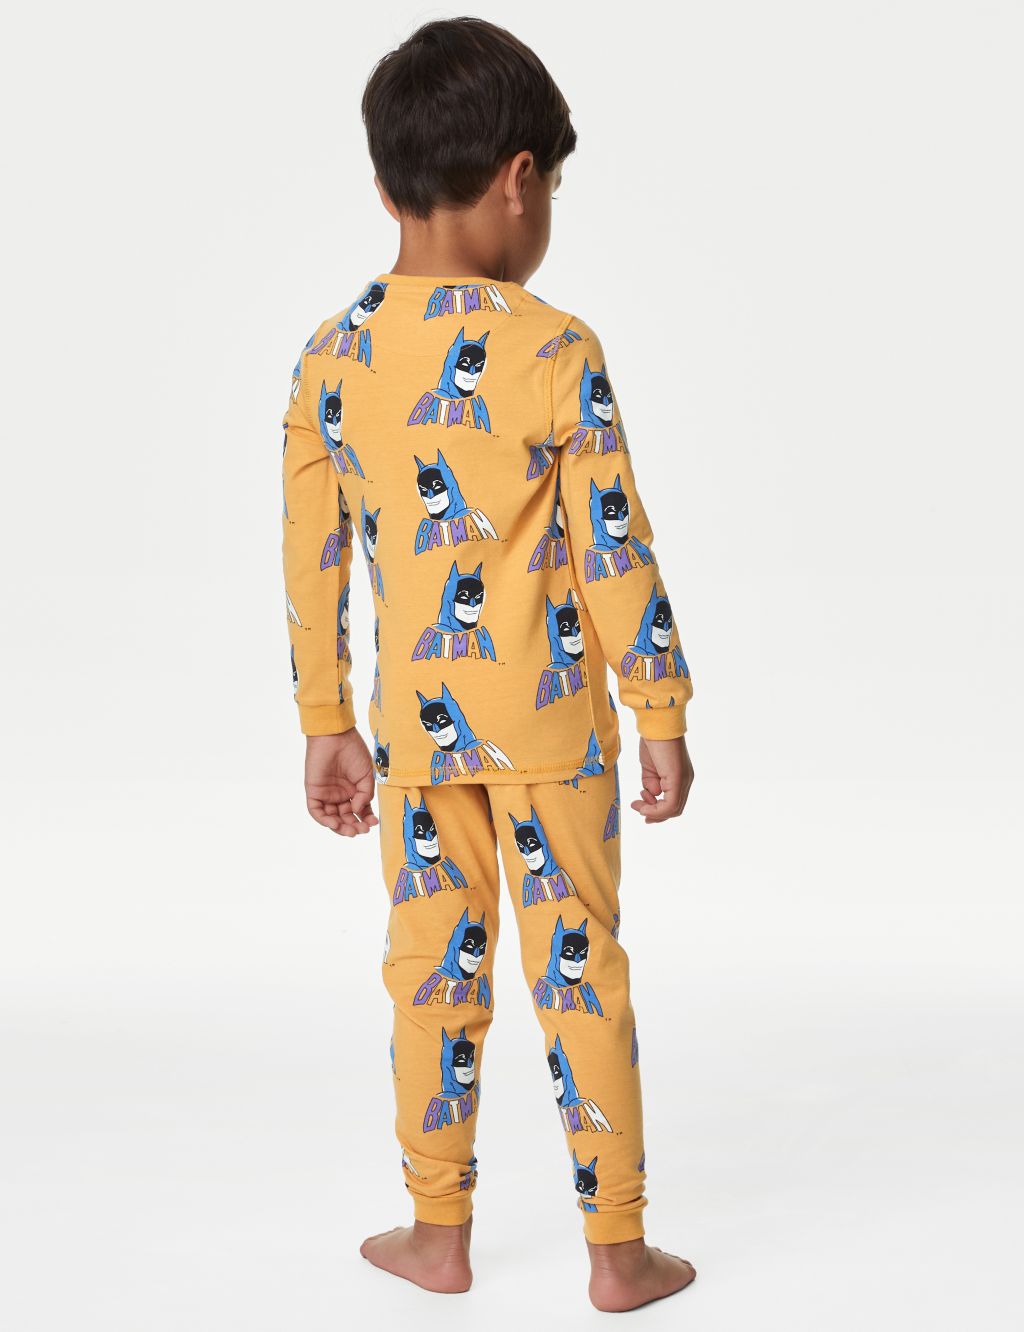 Batman™ Pyjamas (3-12 Yrs) | M&S Collection | M&S